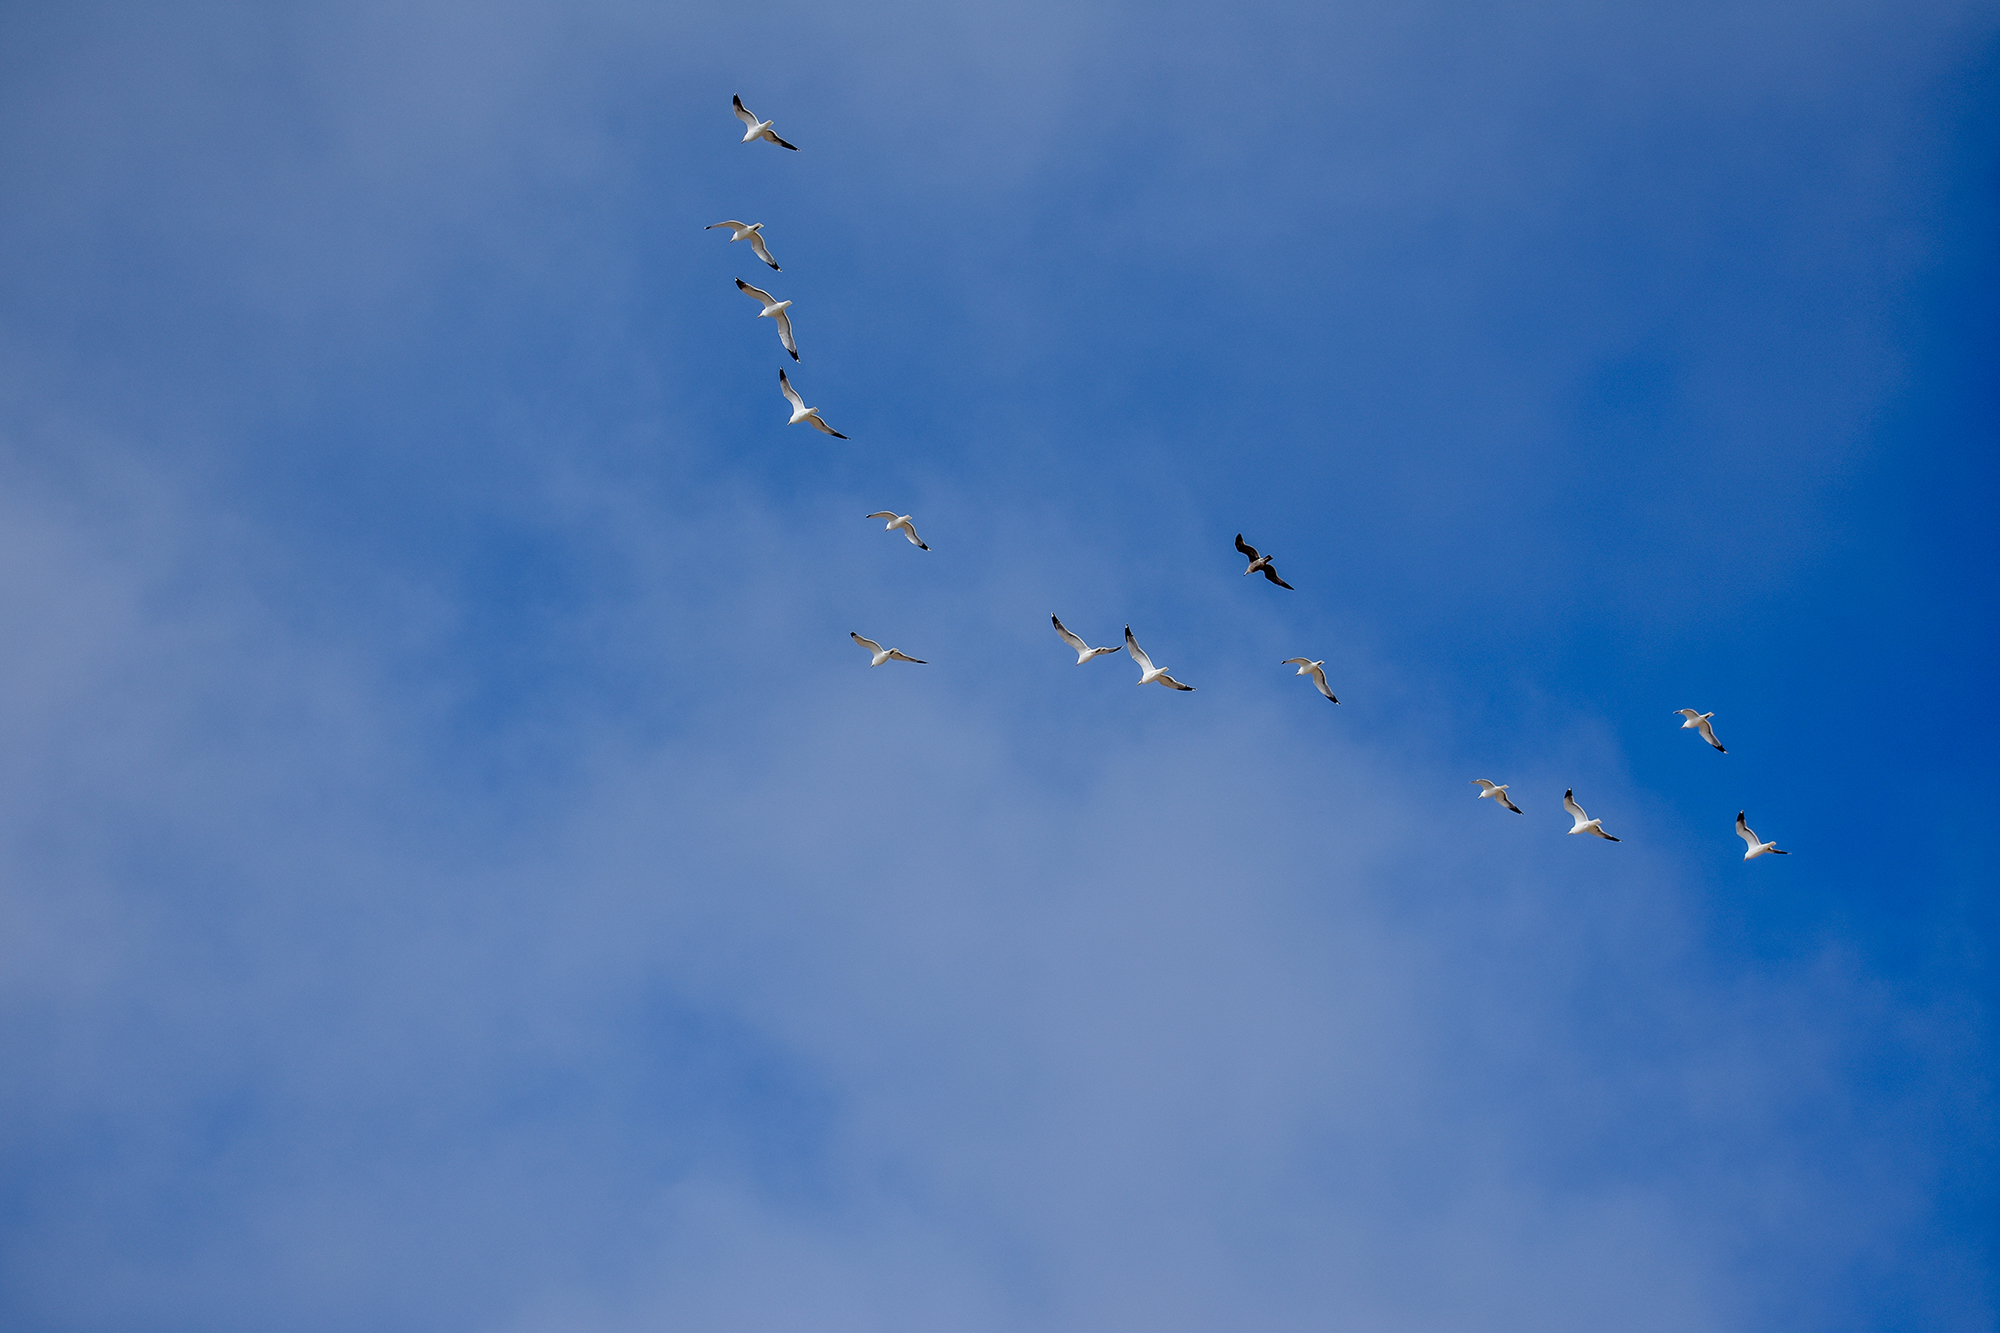 Seagulls fly over the beach on a clear, sunny day.